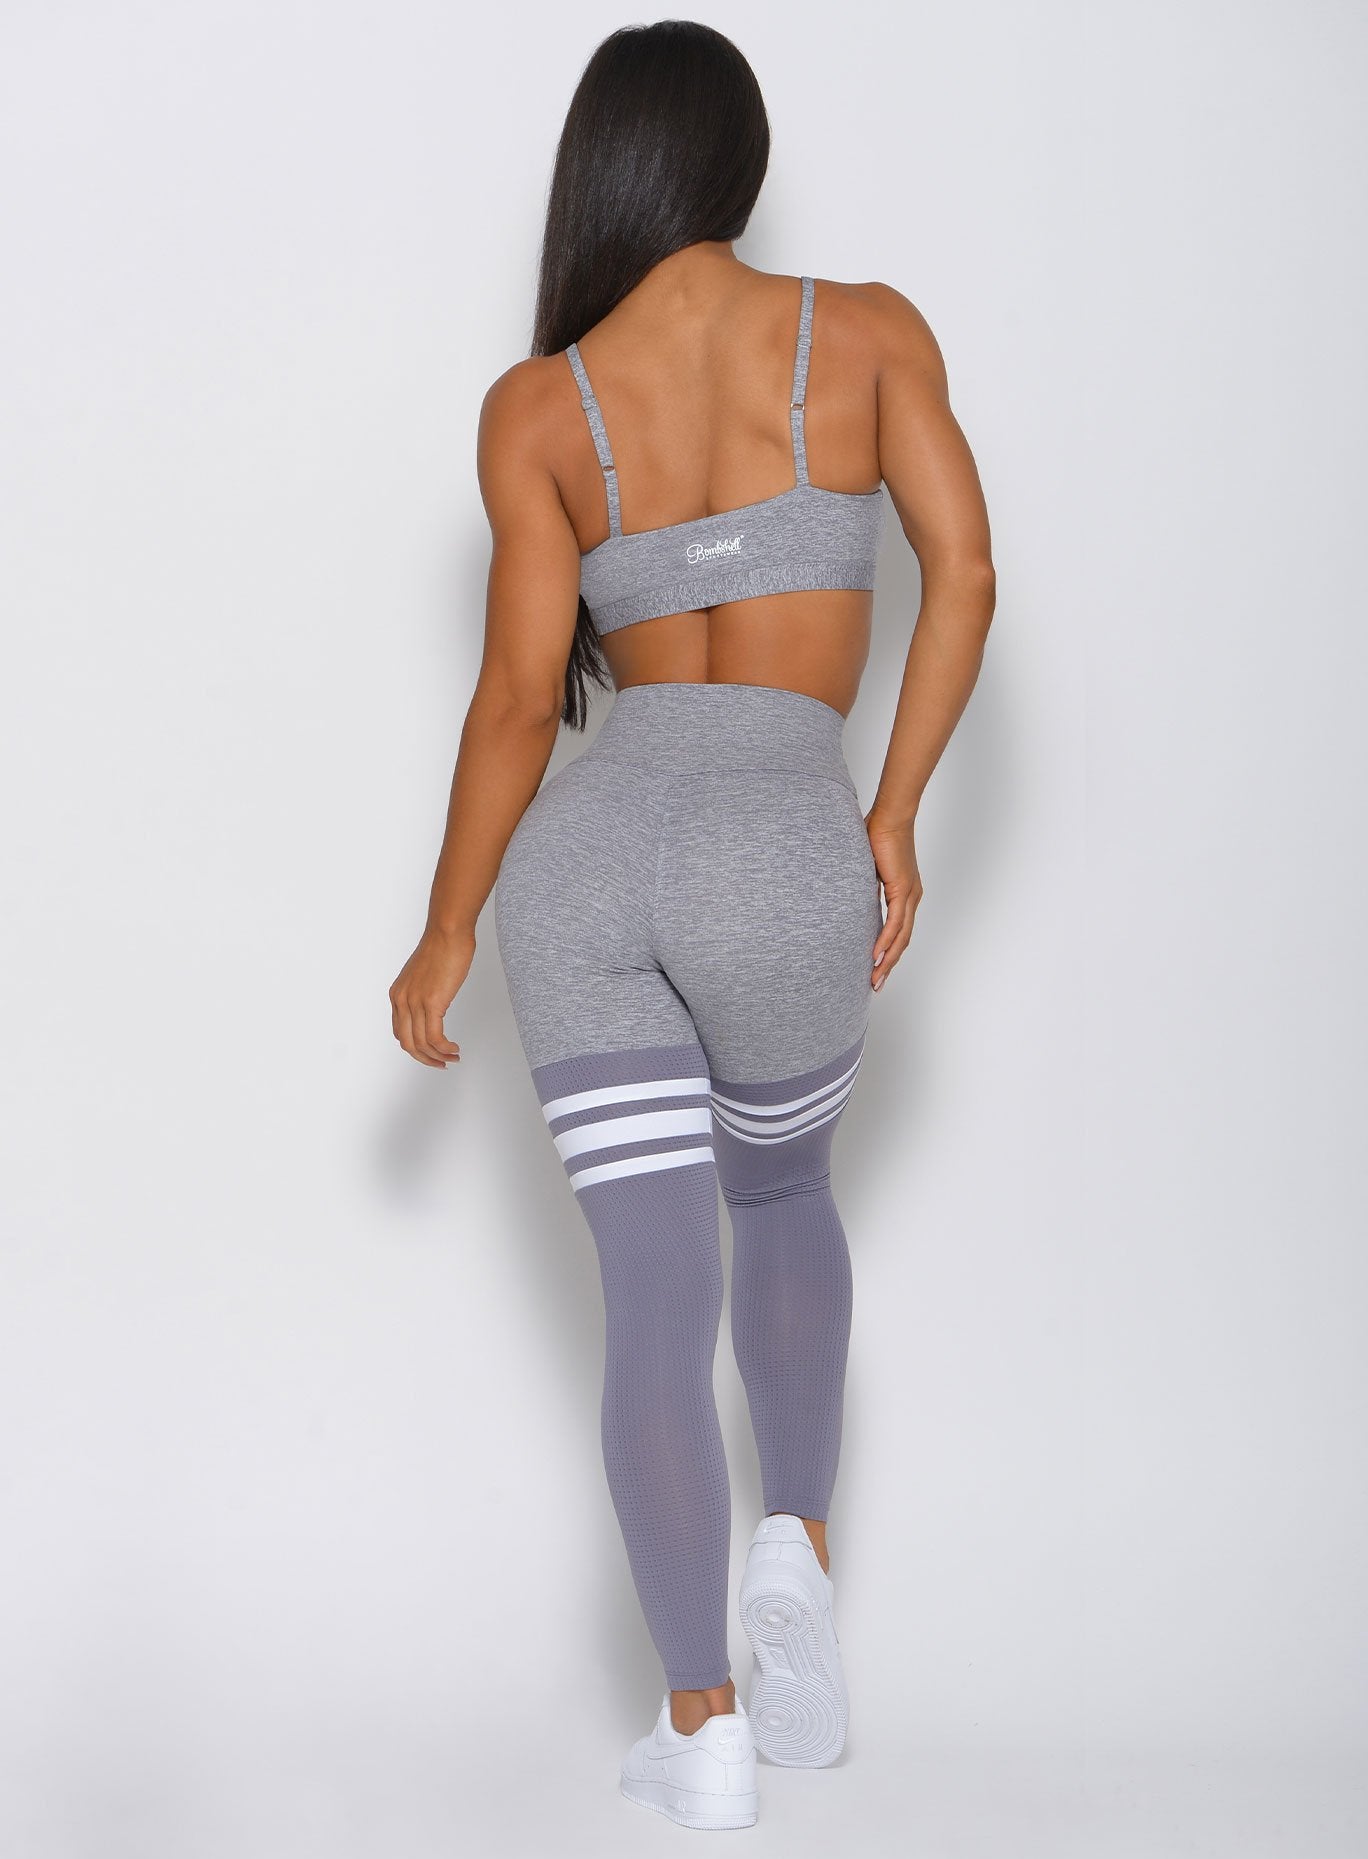 Model facing back wearing grey sports bra and matching high waist leggings